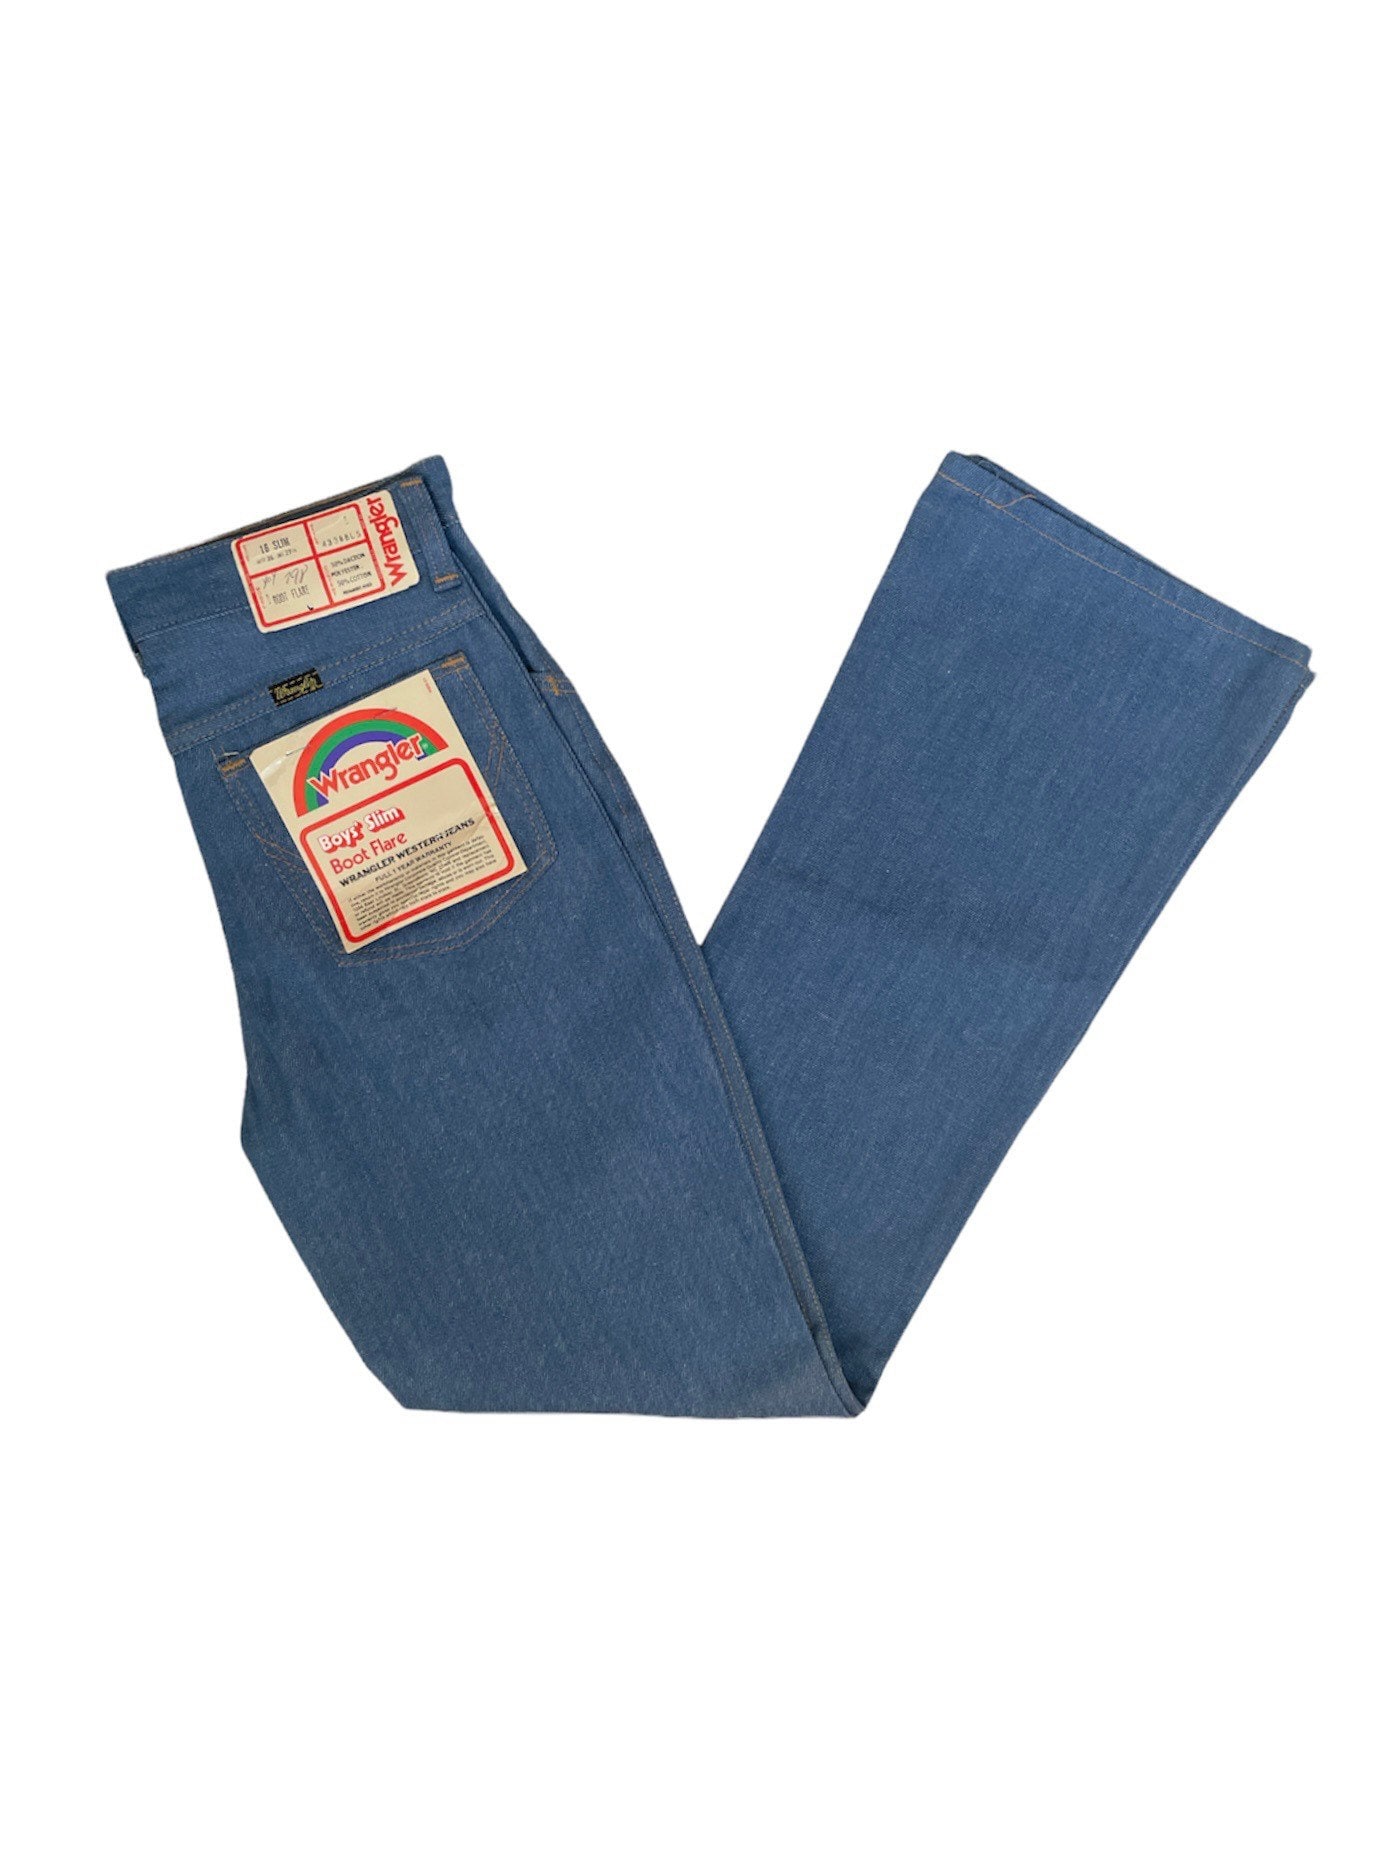 Vintage Wrangler Jungen Slim Boot Flare Western Jeans Gr. 16 Deadstock Nwt 70S Made in Usa von legitjunior